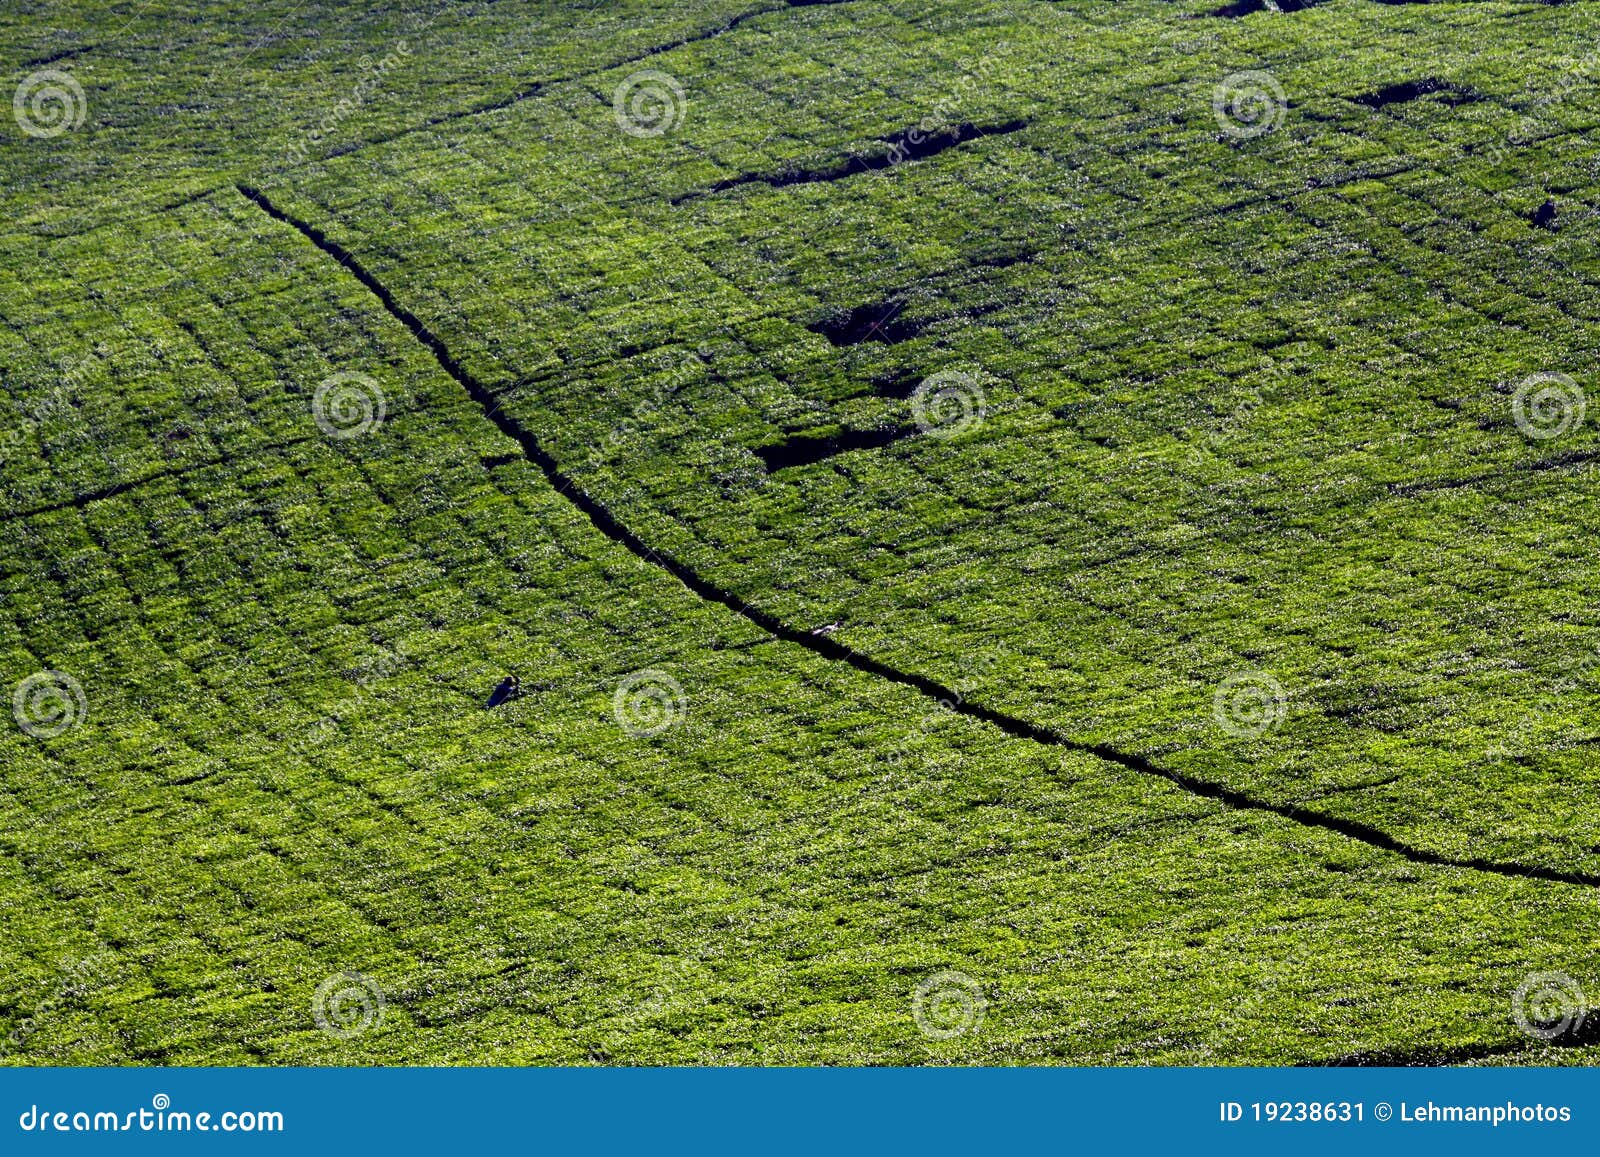 tea plantation rows green hills landscape